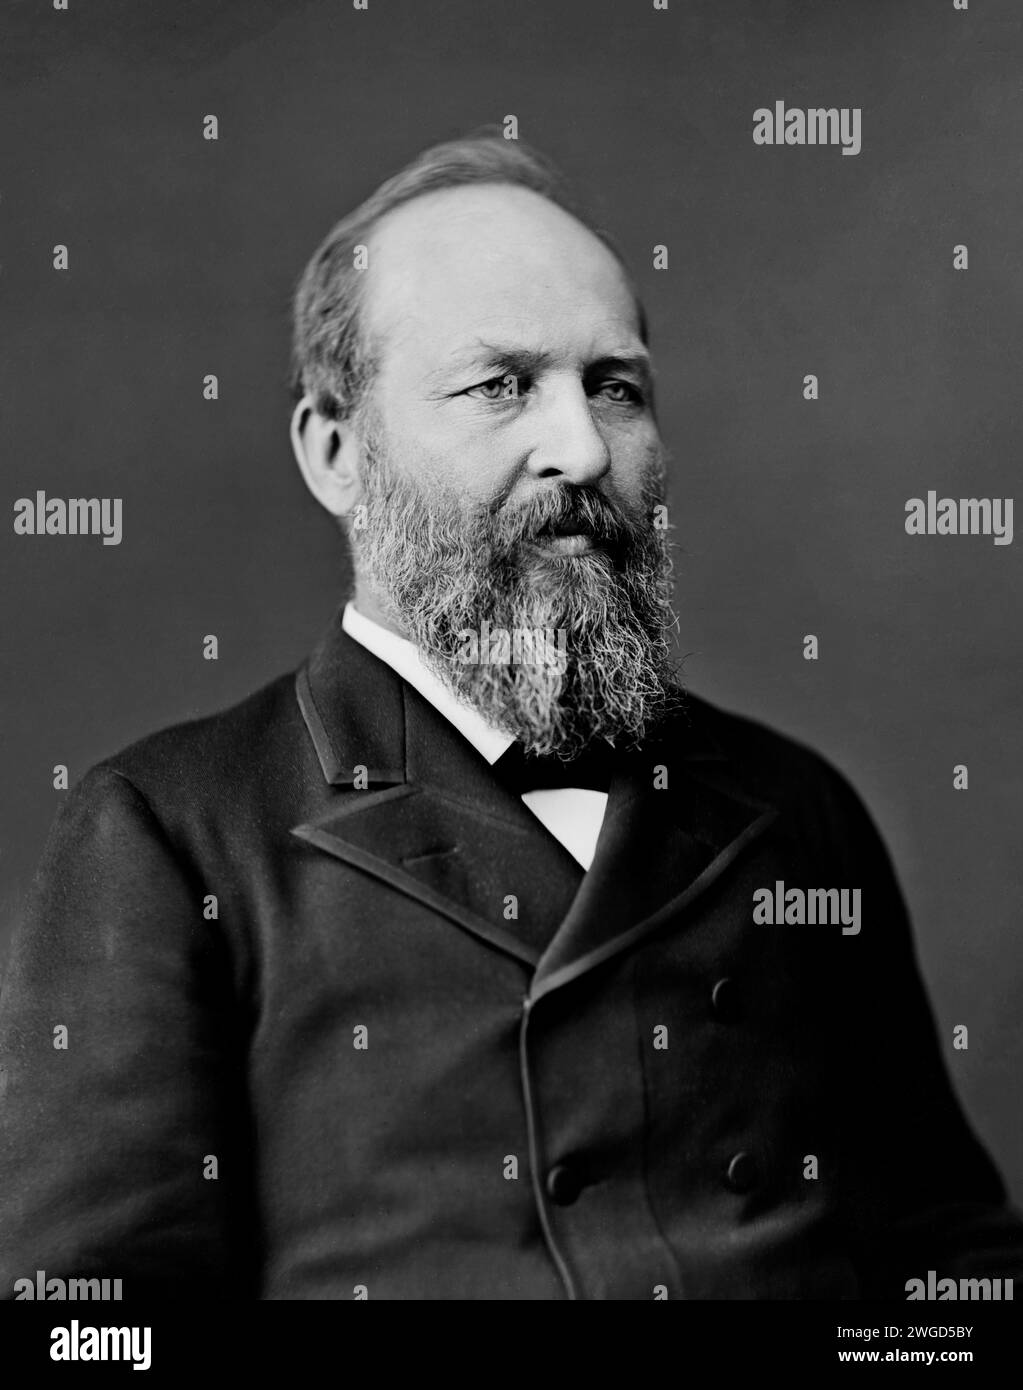 Porträt des Präsidenten James Abram Garfield. Um 1881. Aus der Brady-Handy Kollektion. Stockfoto